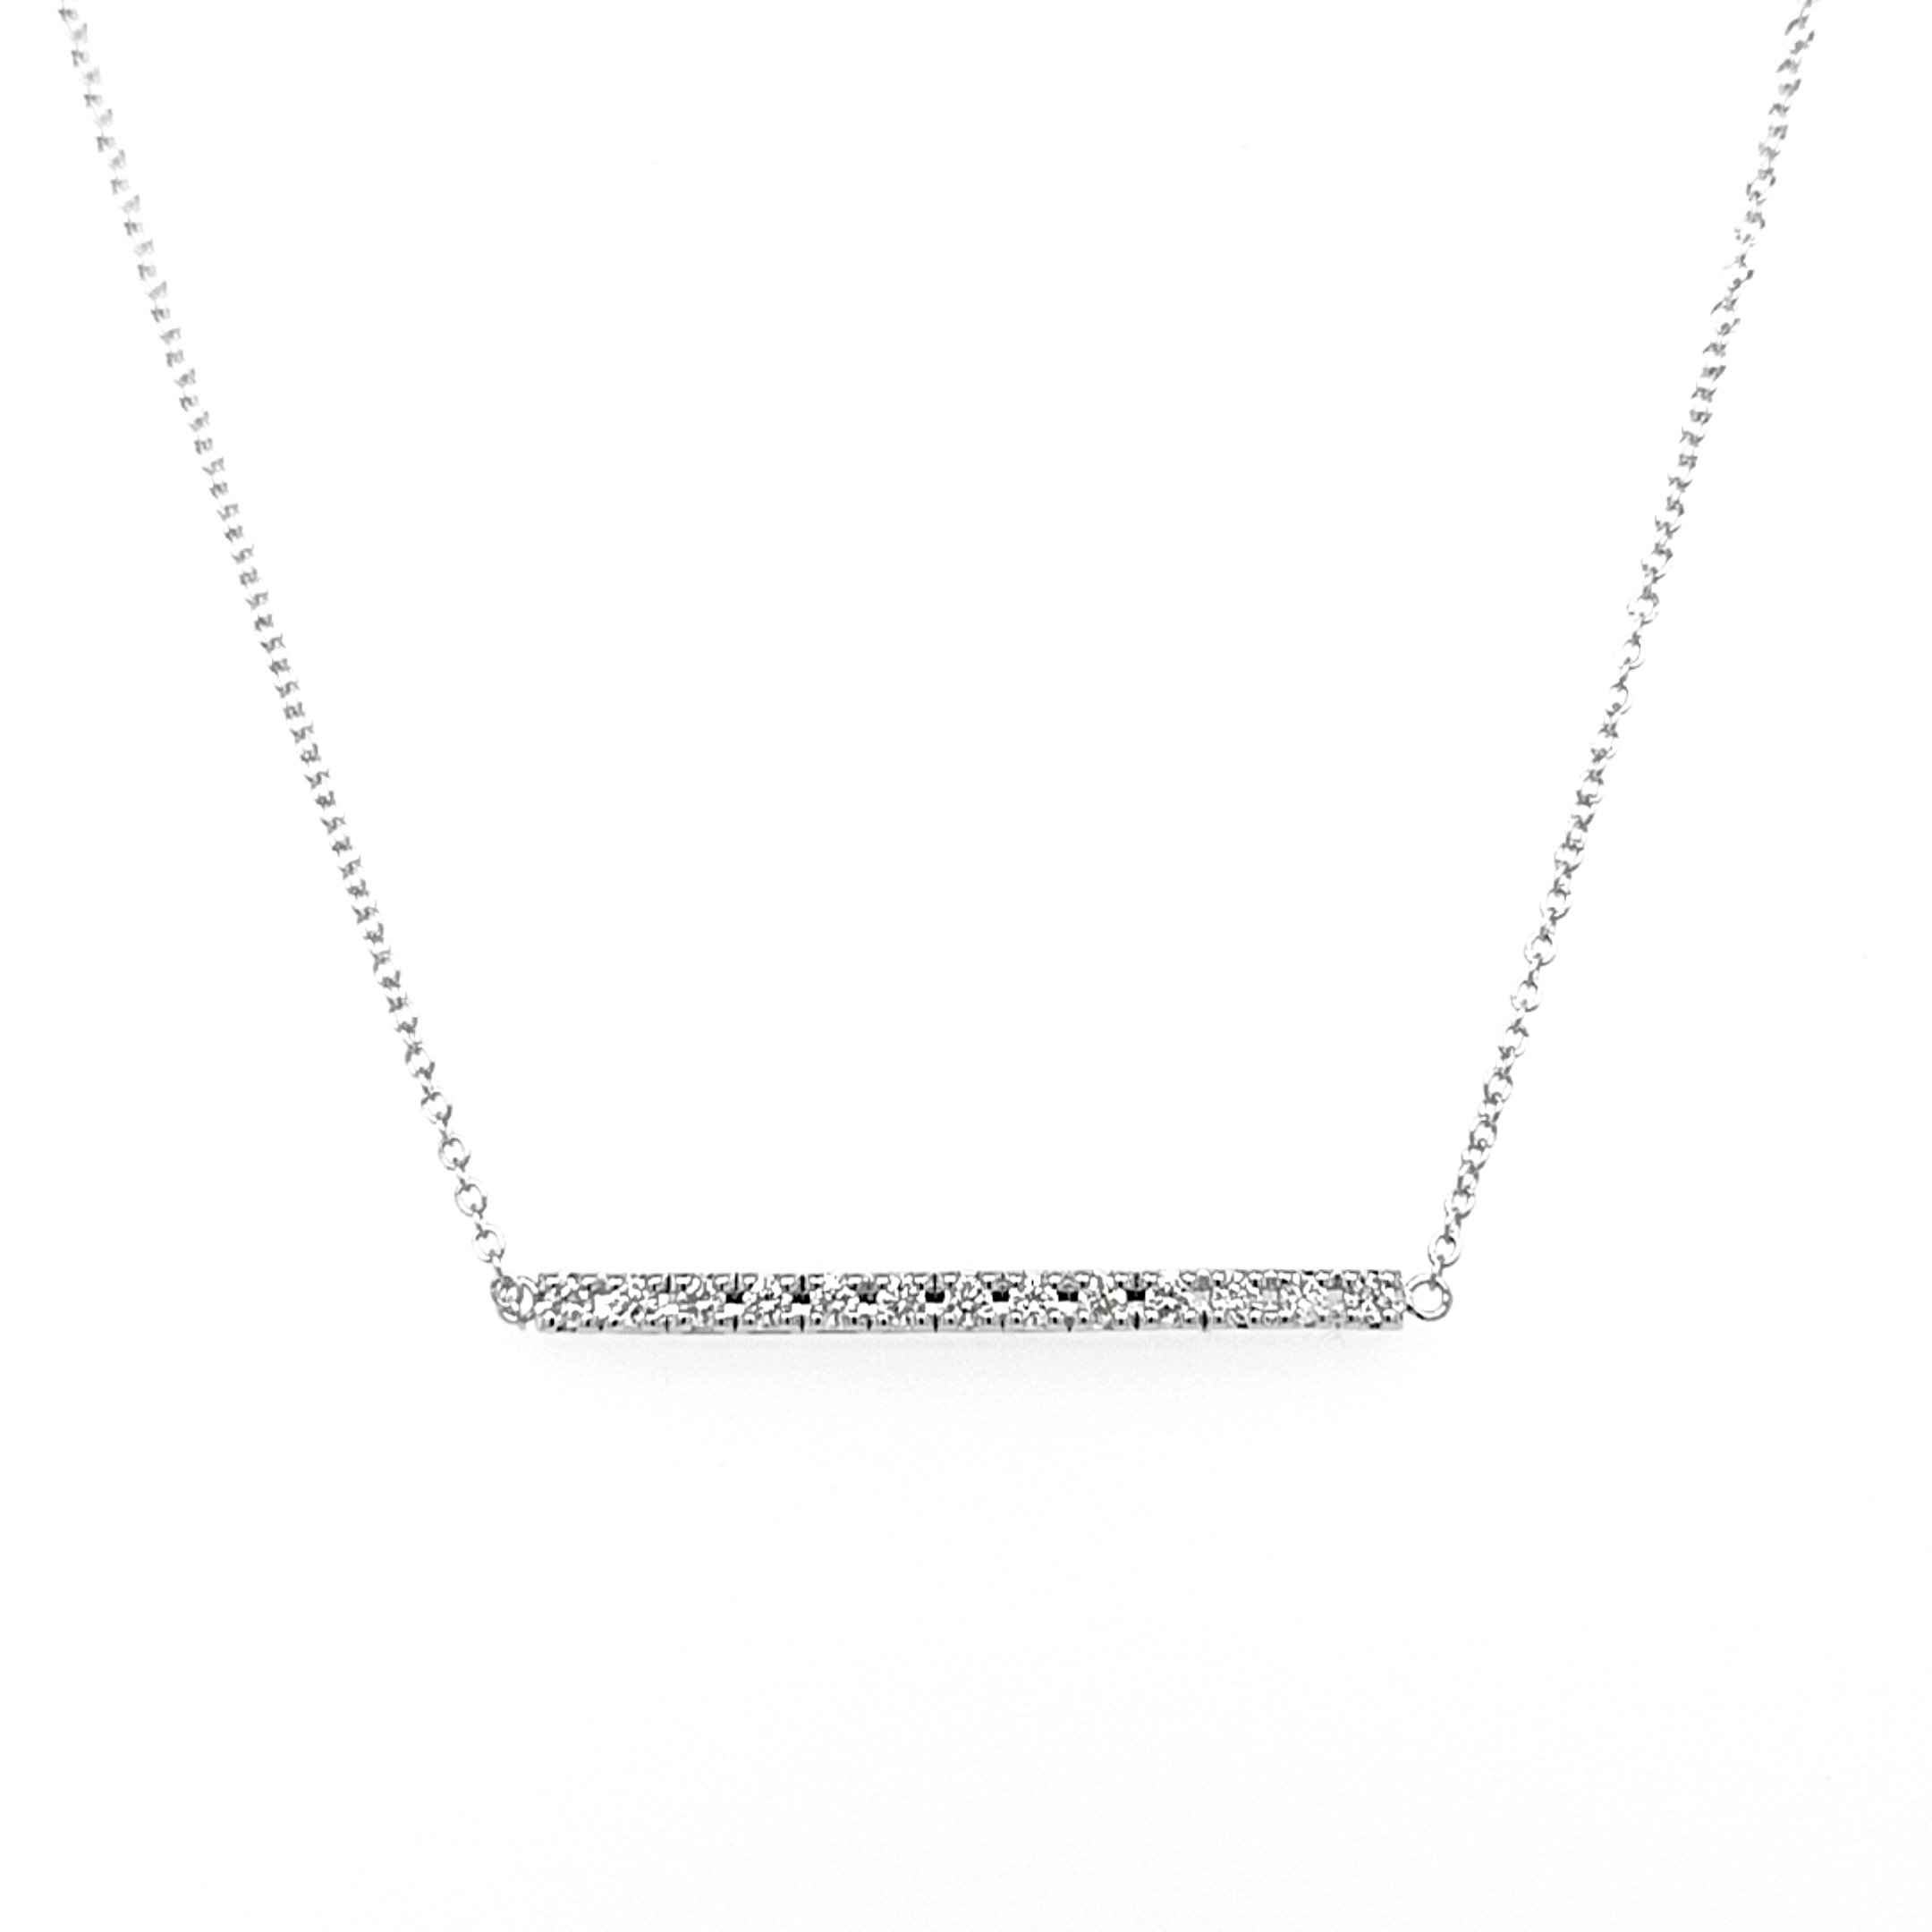 18ct White Gold Diamond-Set Bar Necklace